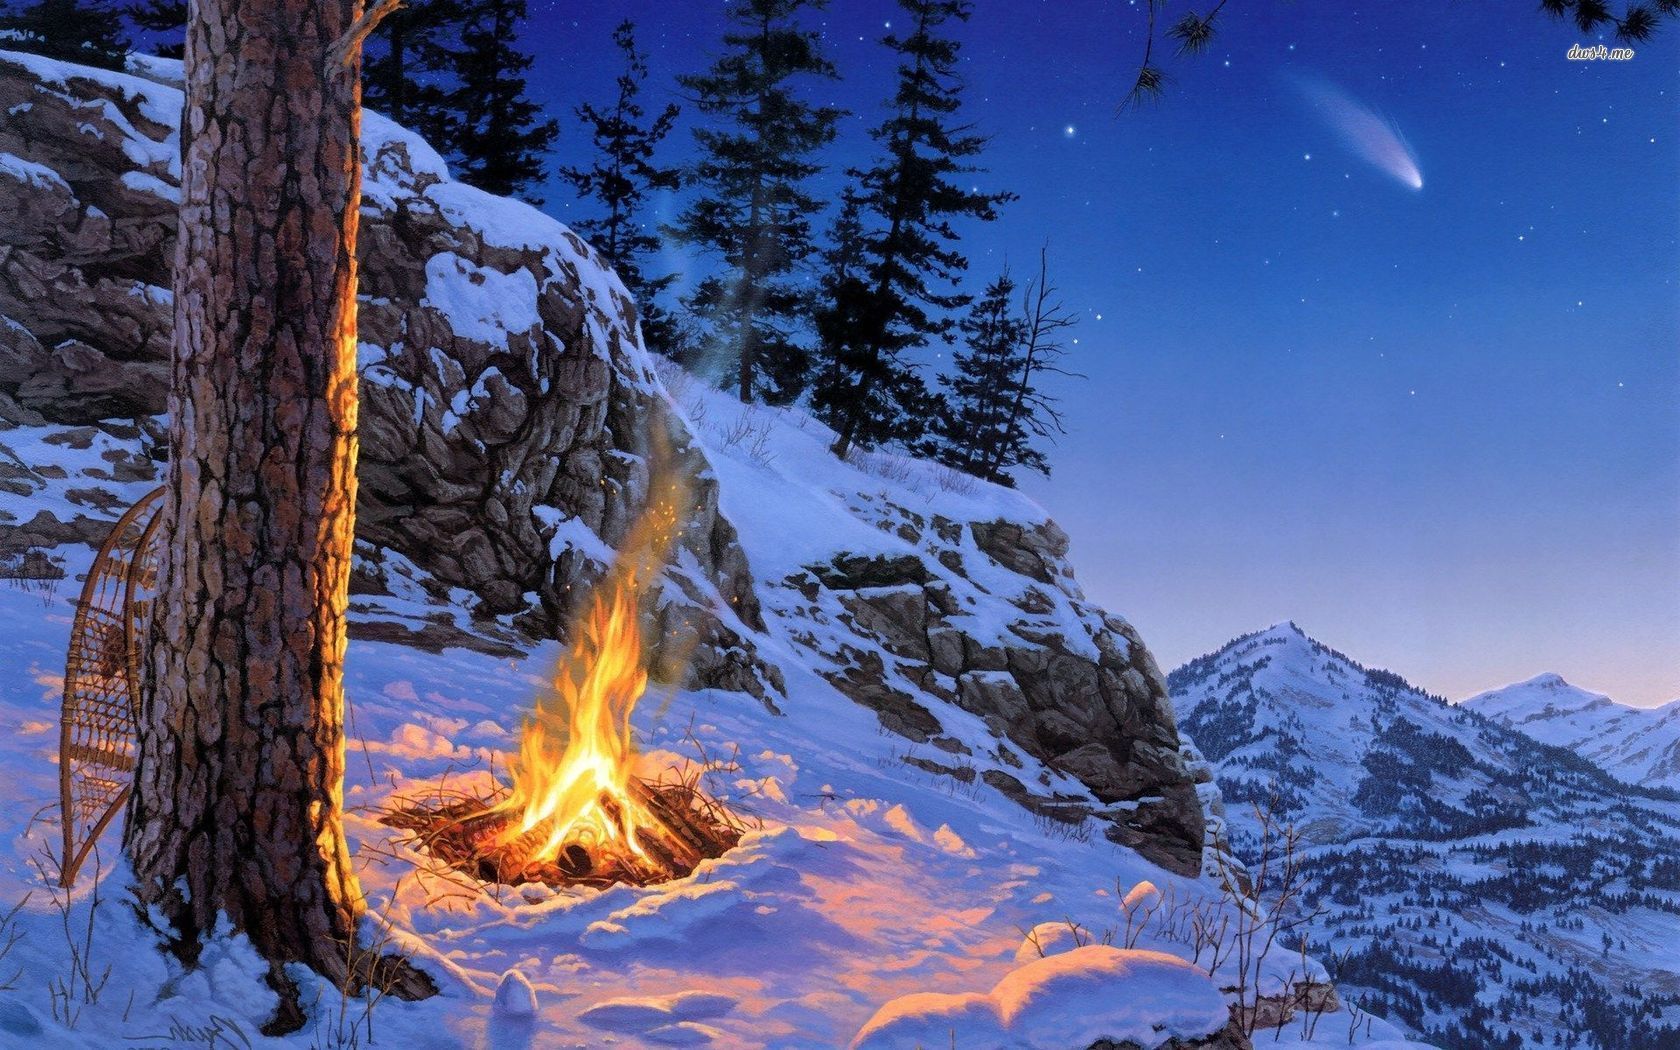 Bonfire on the mountain HD wallpaper. Photography wallpaper, Mountain wallpaper, Winter wallpaper